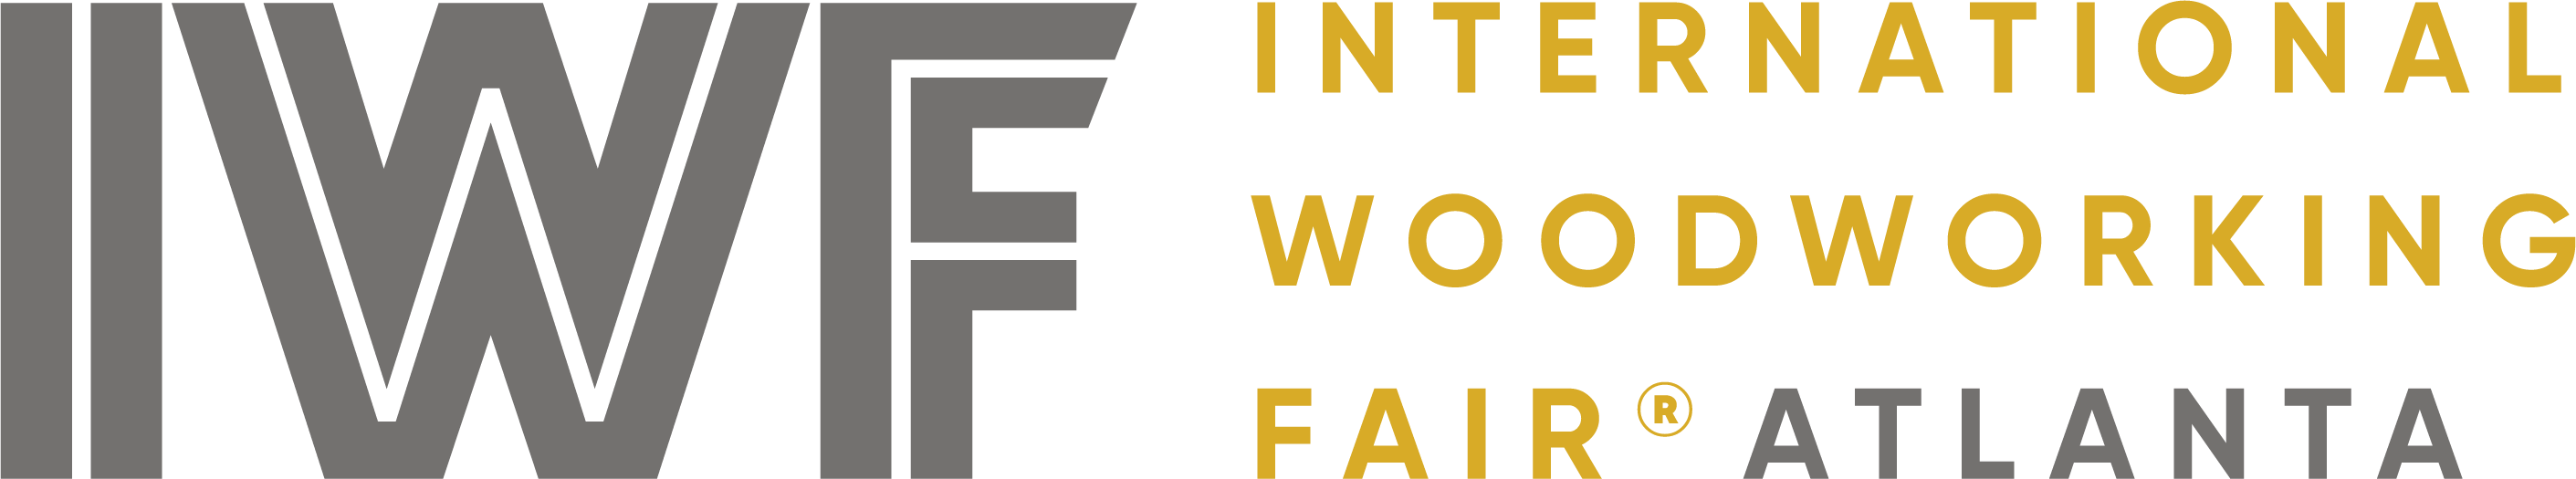 International Woodworking Fair (IWF) logo